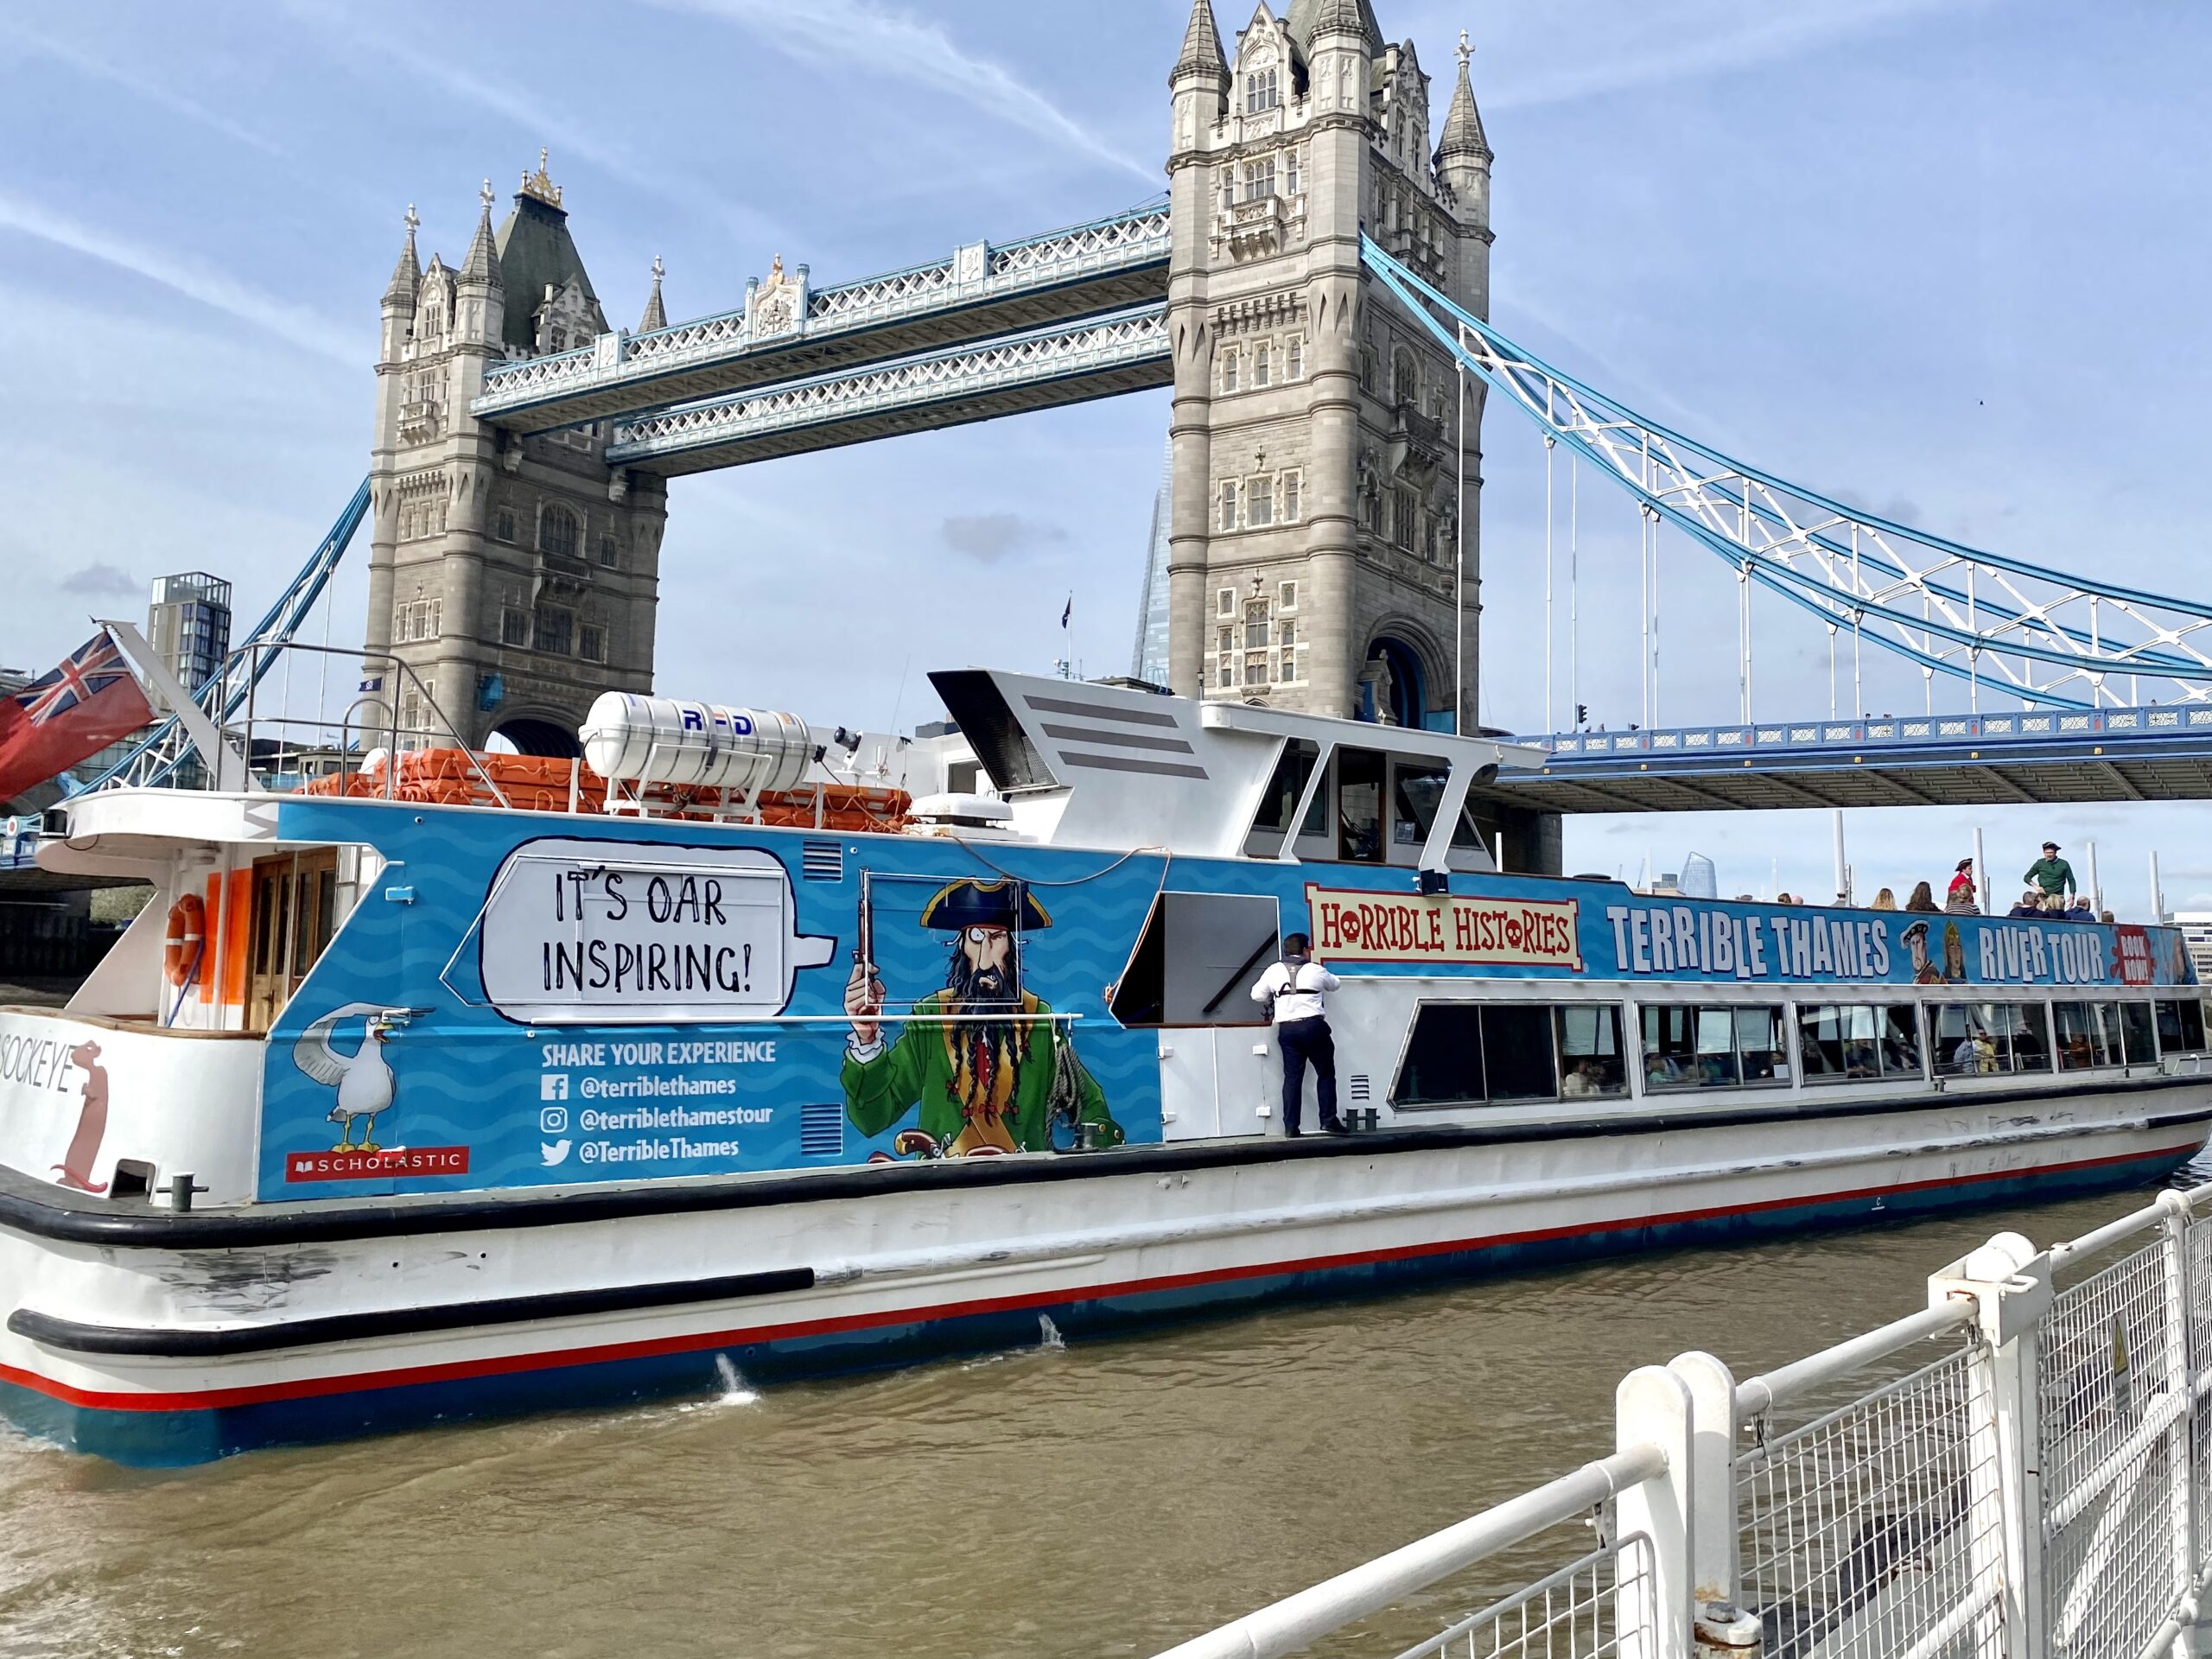 Horrible Histories Terrible Thames Boat Tour London review